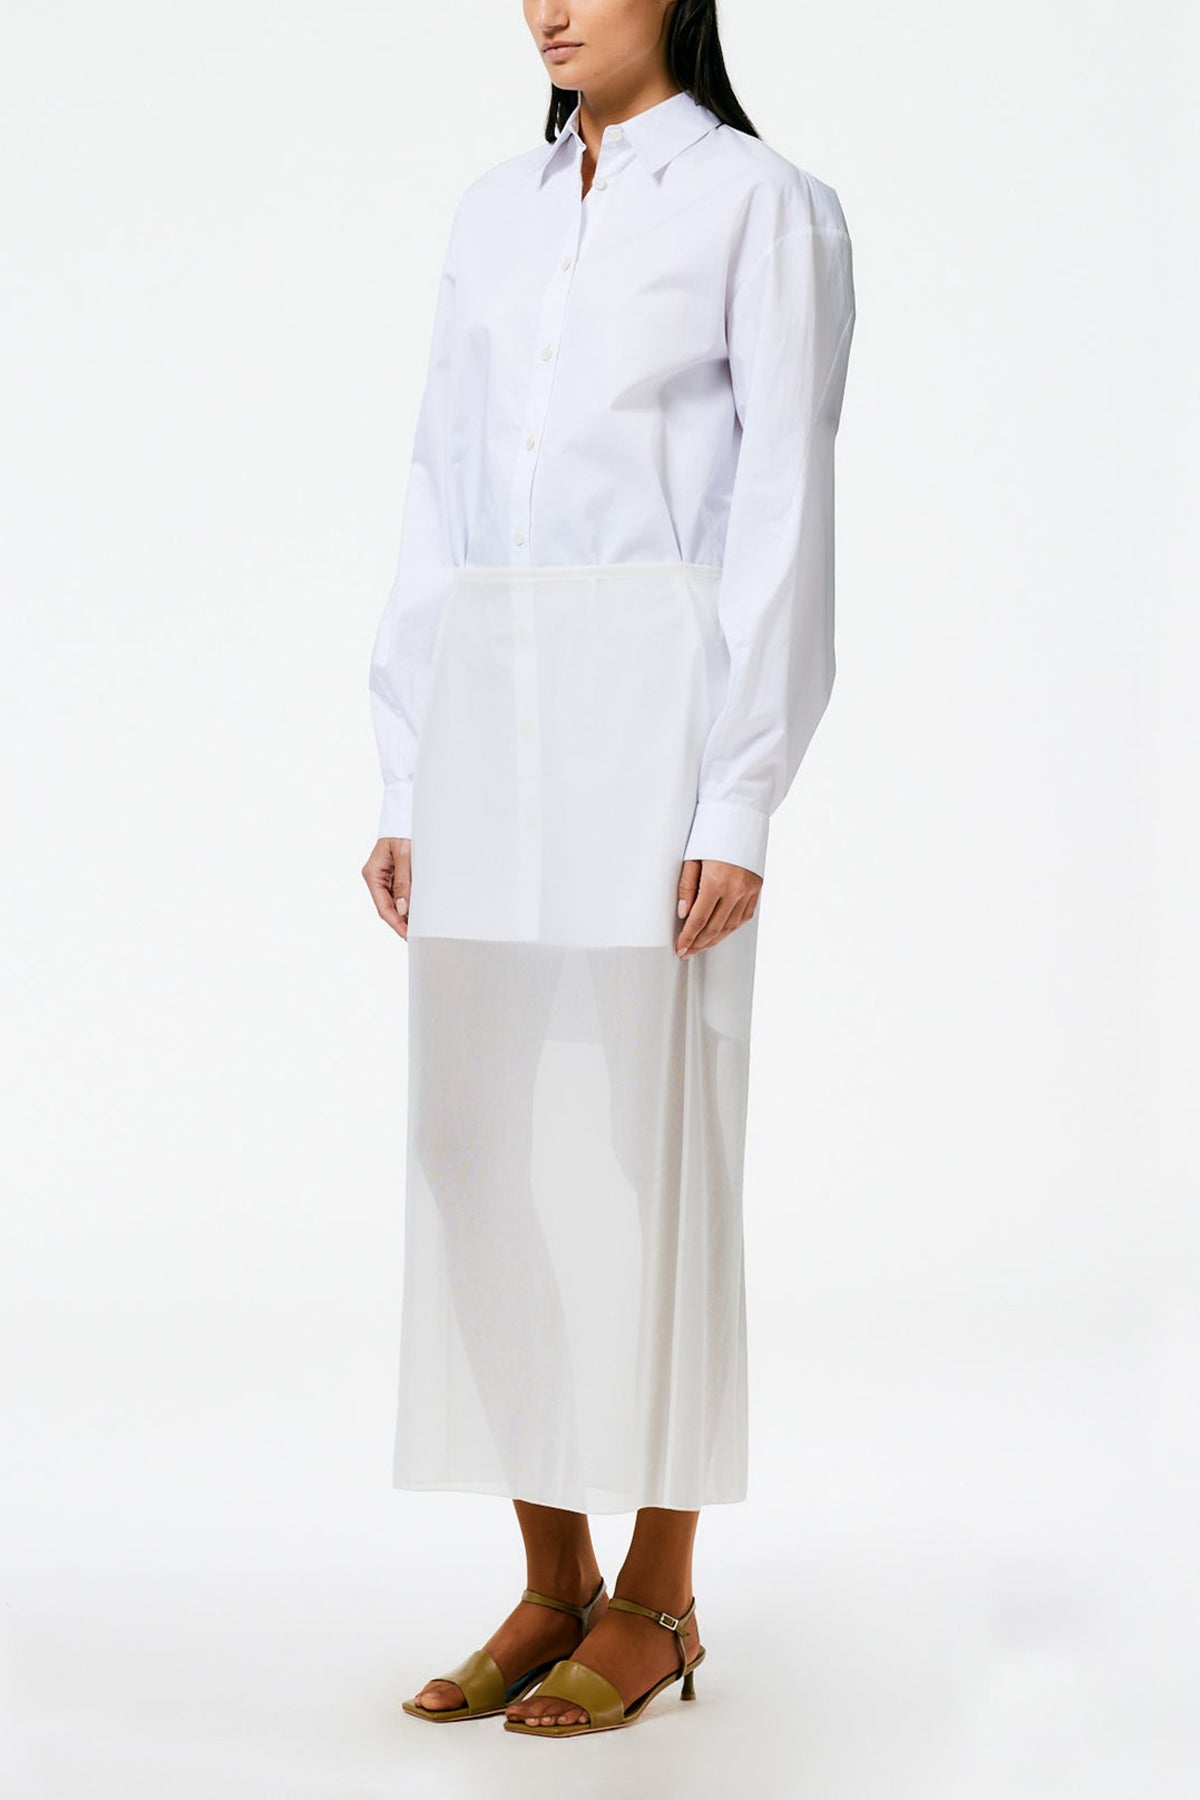 Sheer Gauze Maxi Pencil Skirt in White - shop-olivia.com